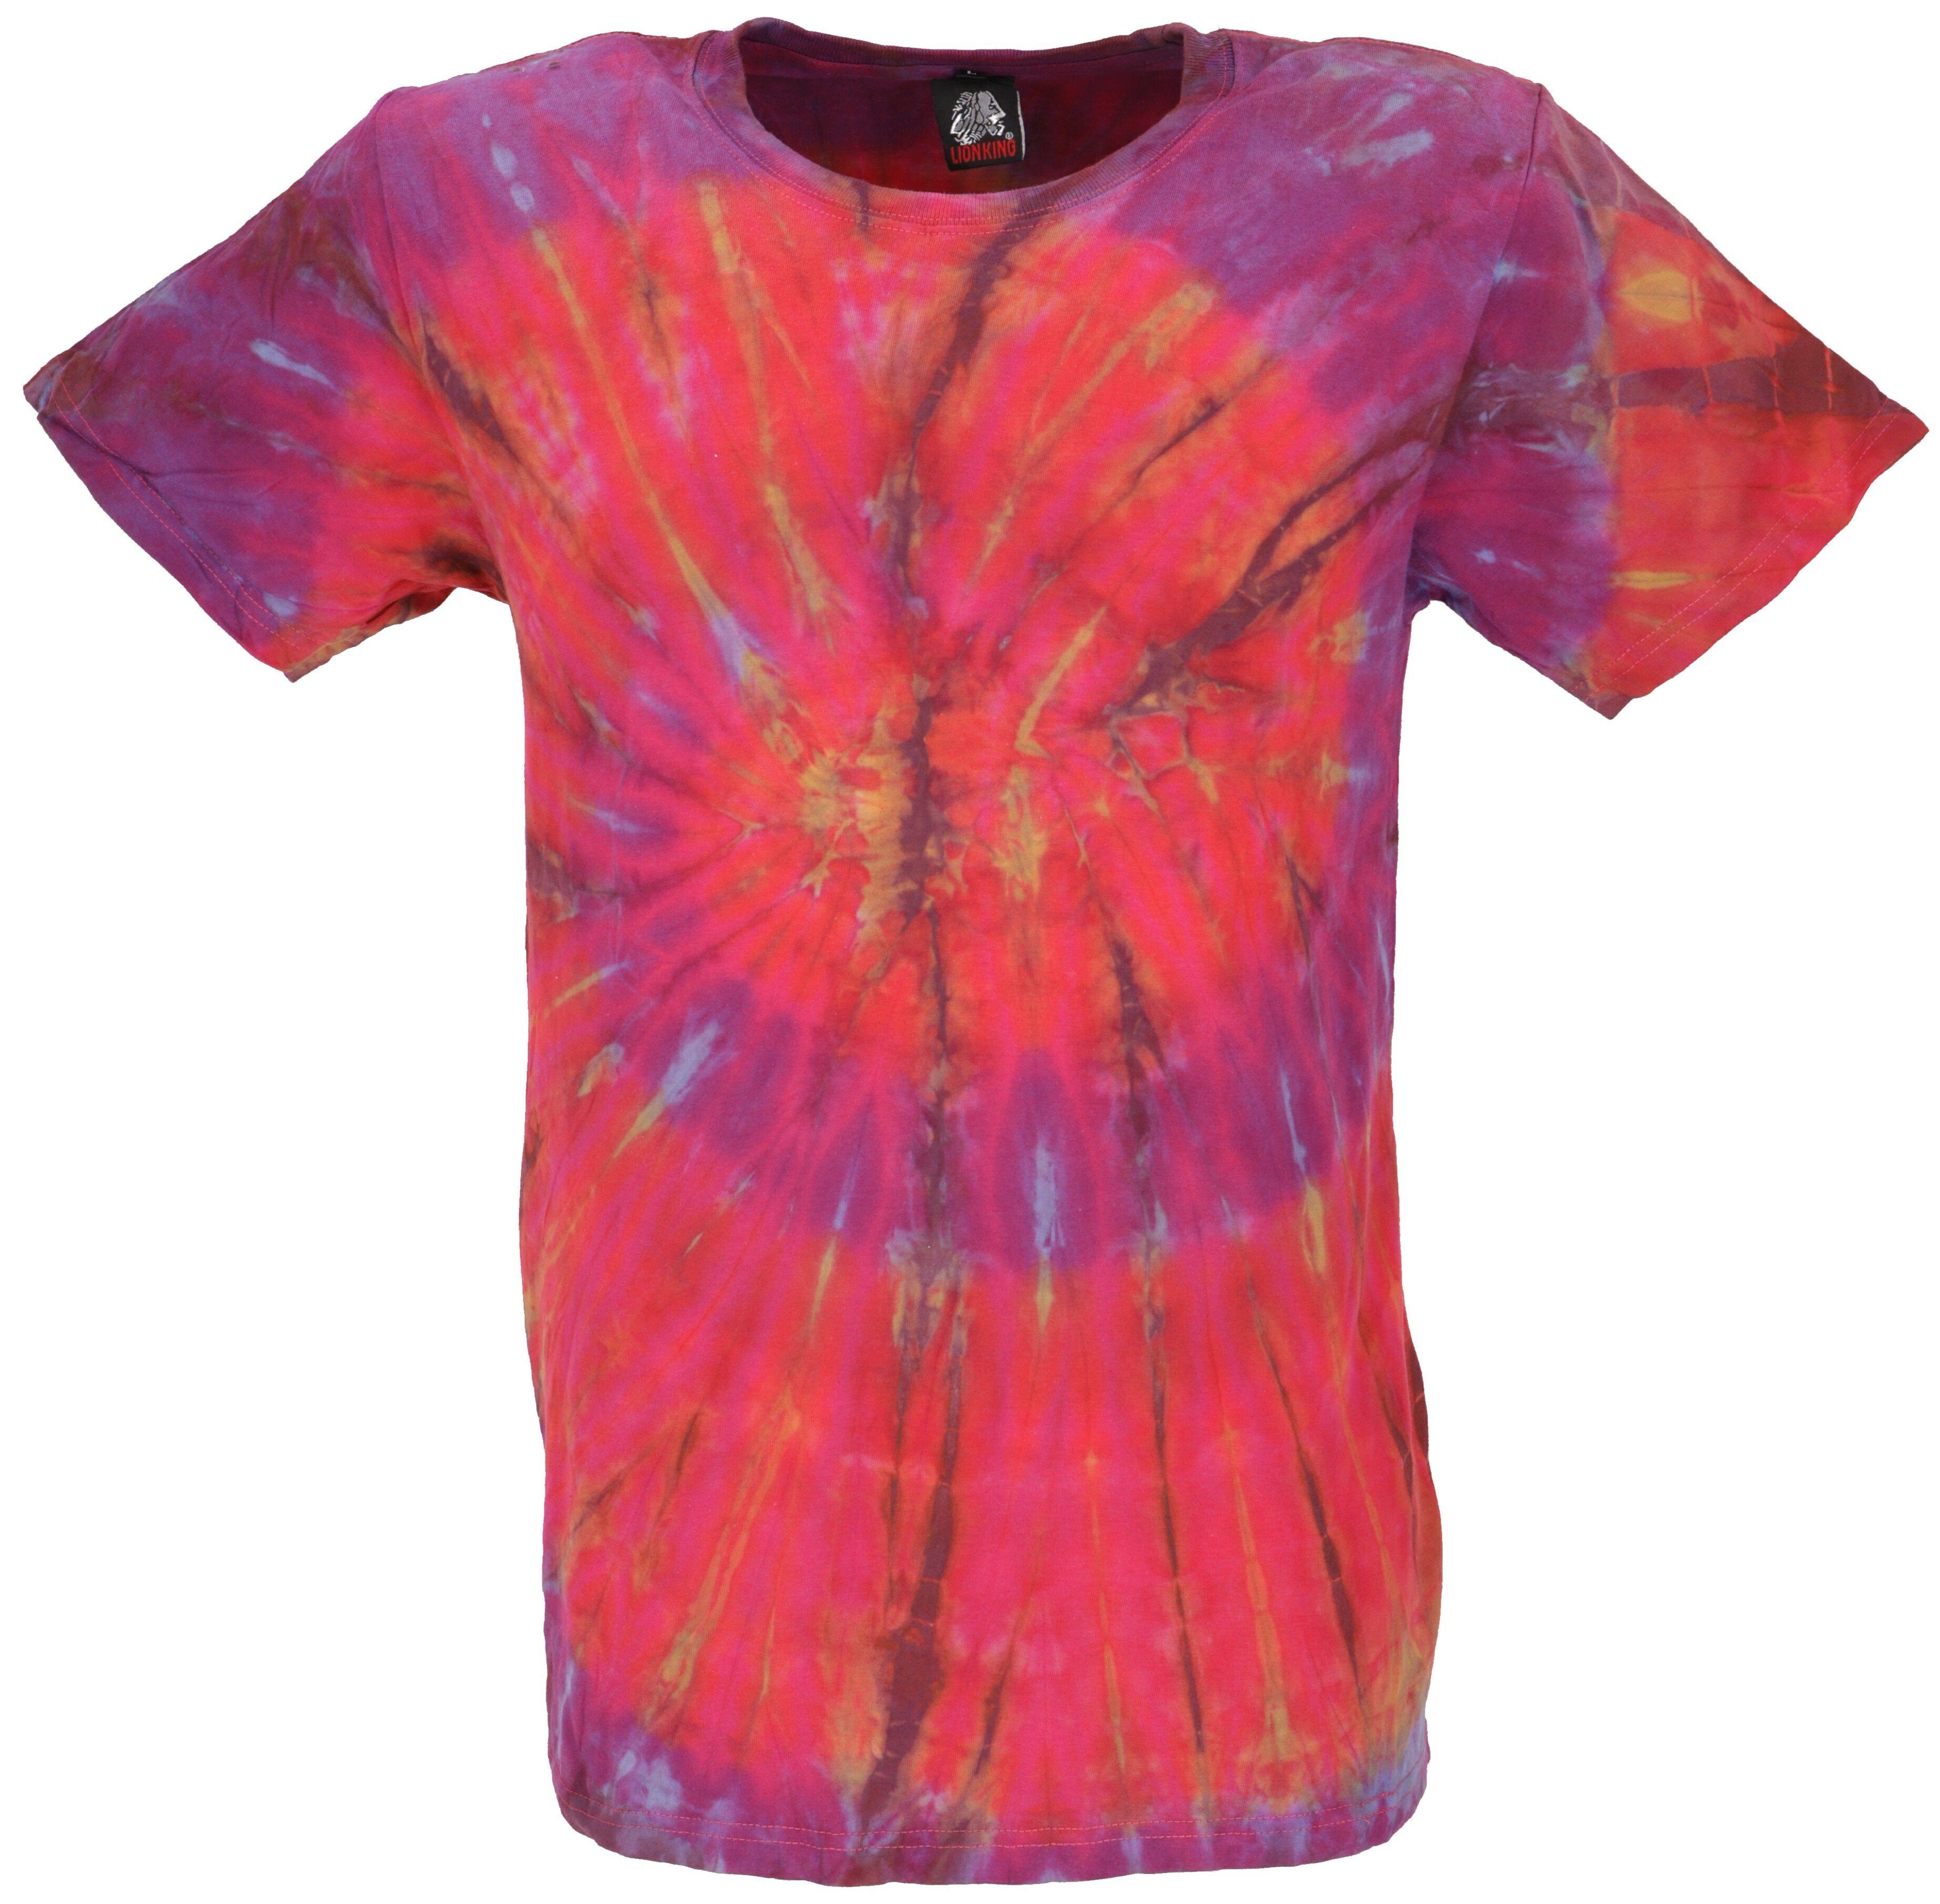 Guru-Shop T-Shirt Batik T-Shirt, Herren Kurzarm Tie Dye Shirt -.. Handarbeit, Hippie, Festival, Goa Style, alternative Bekleidung pink